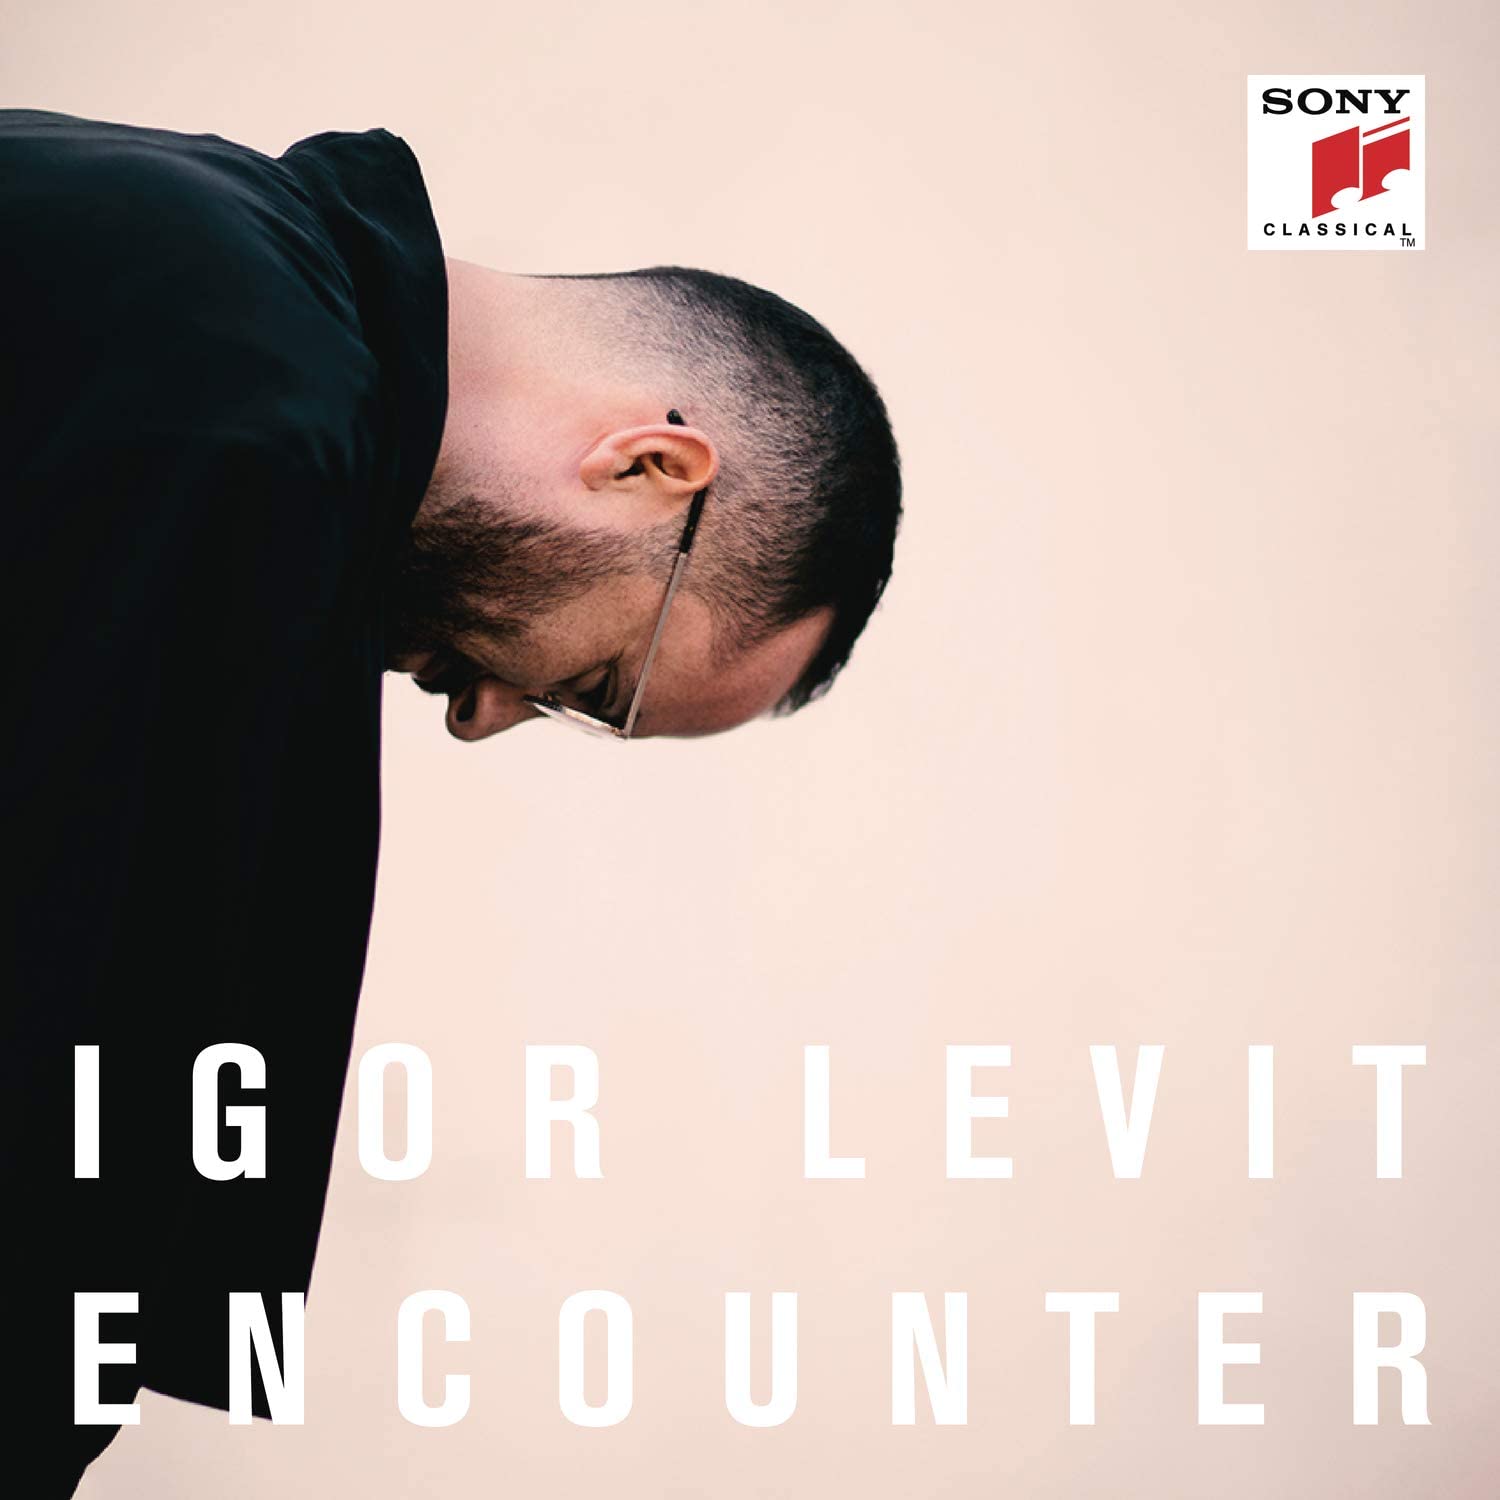 Igor Levit Encounter